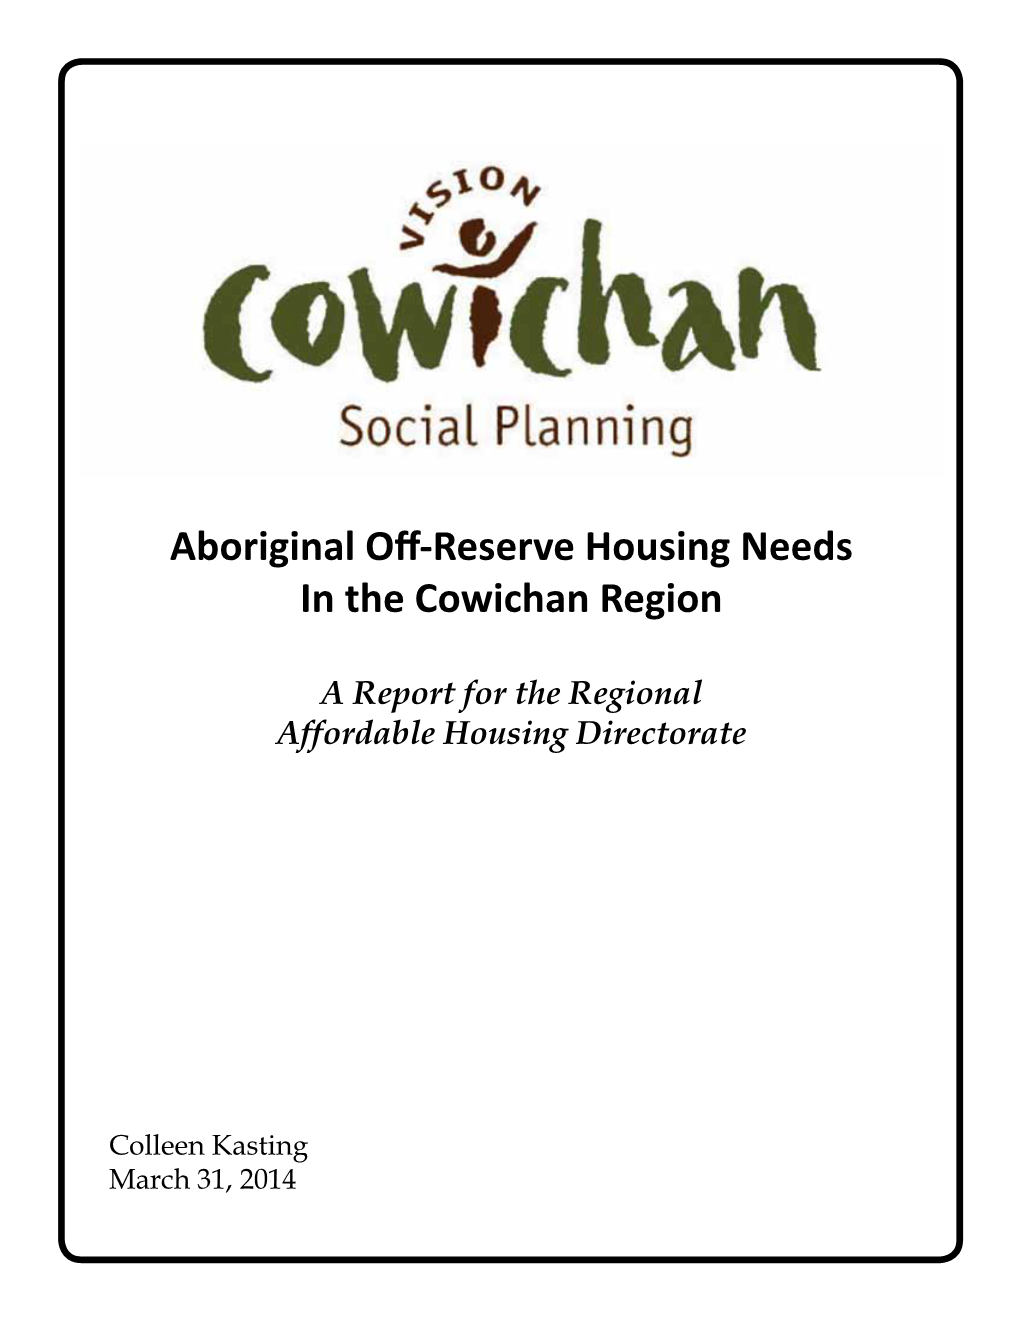 Aboriginal Off-Reserve Housing Needs in the Cowichan Region